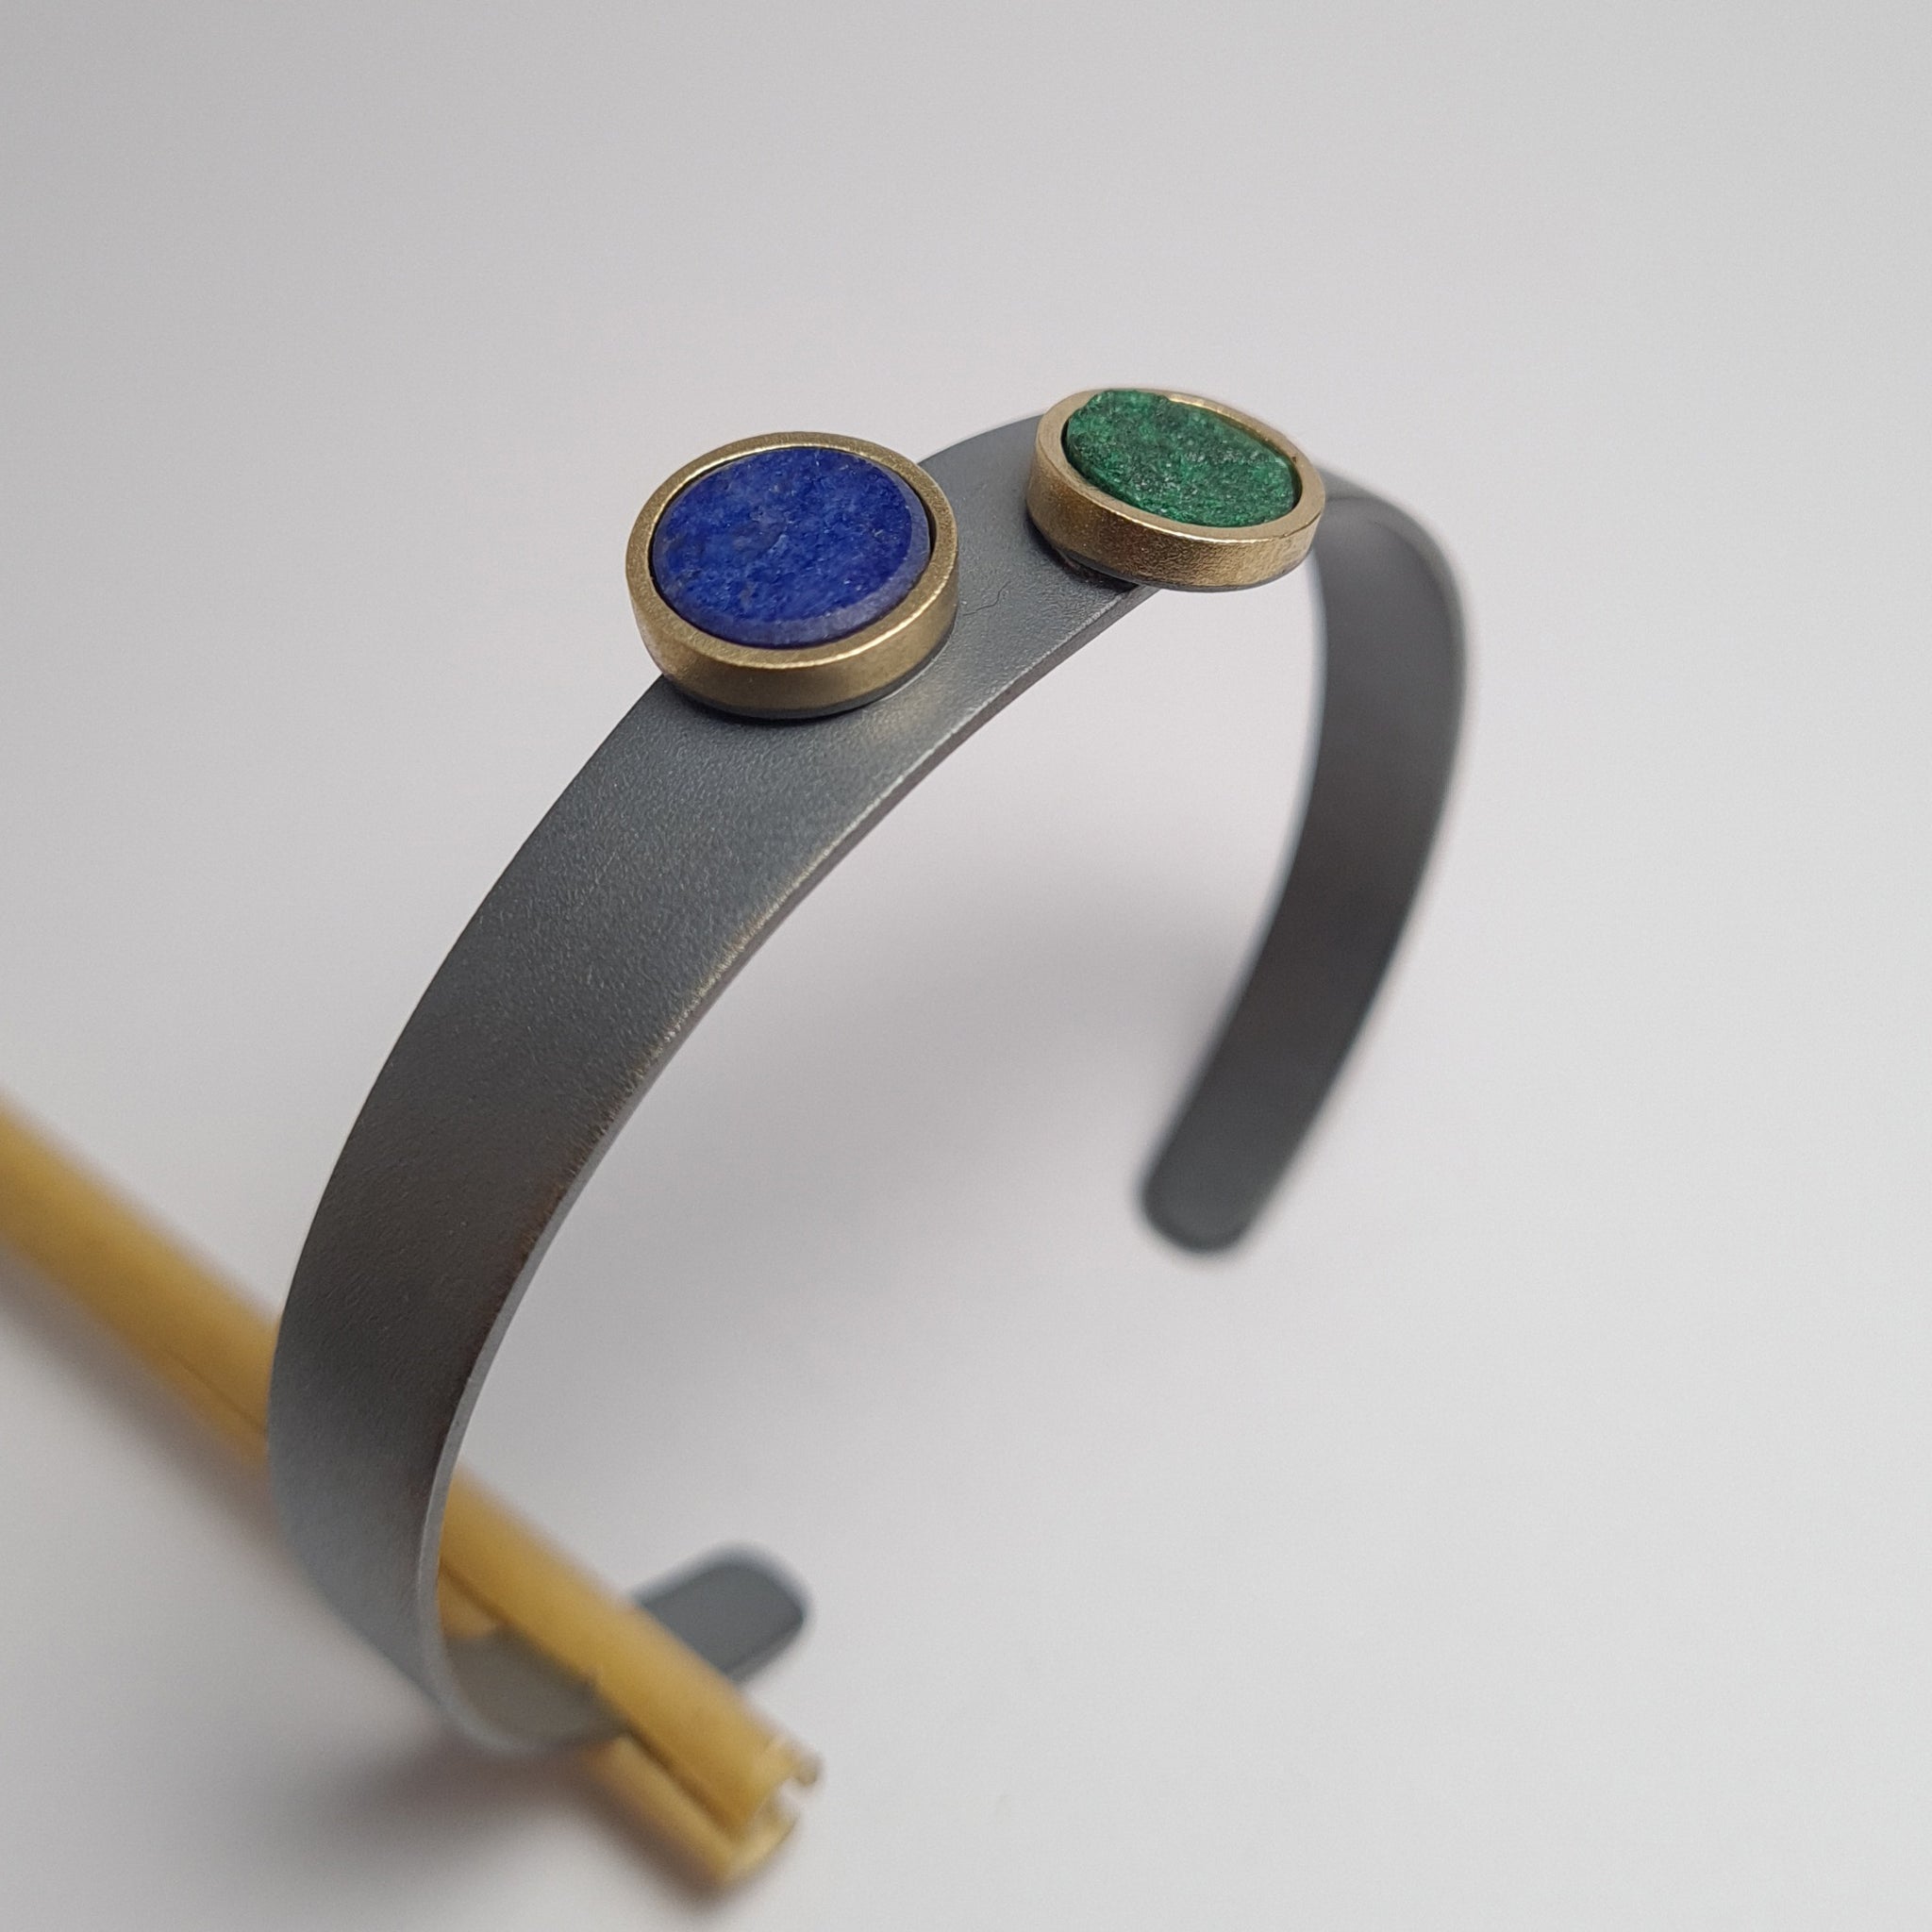 Bracelet by chance. Blue, green.